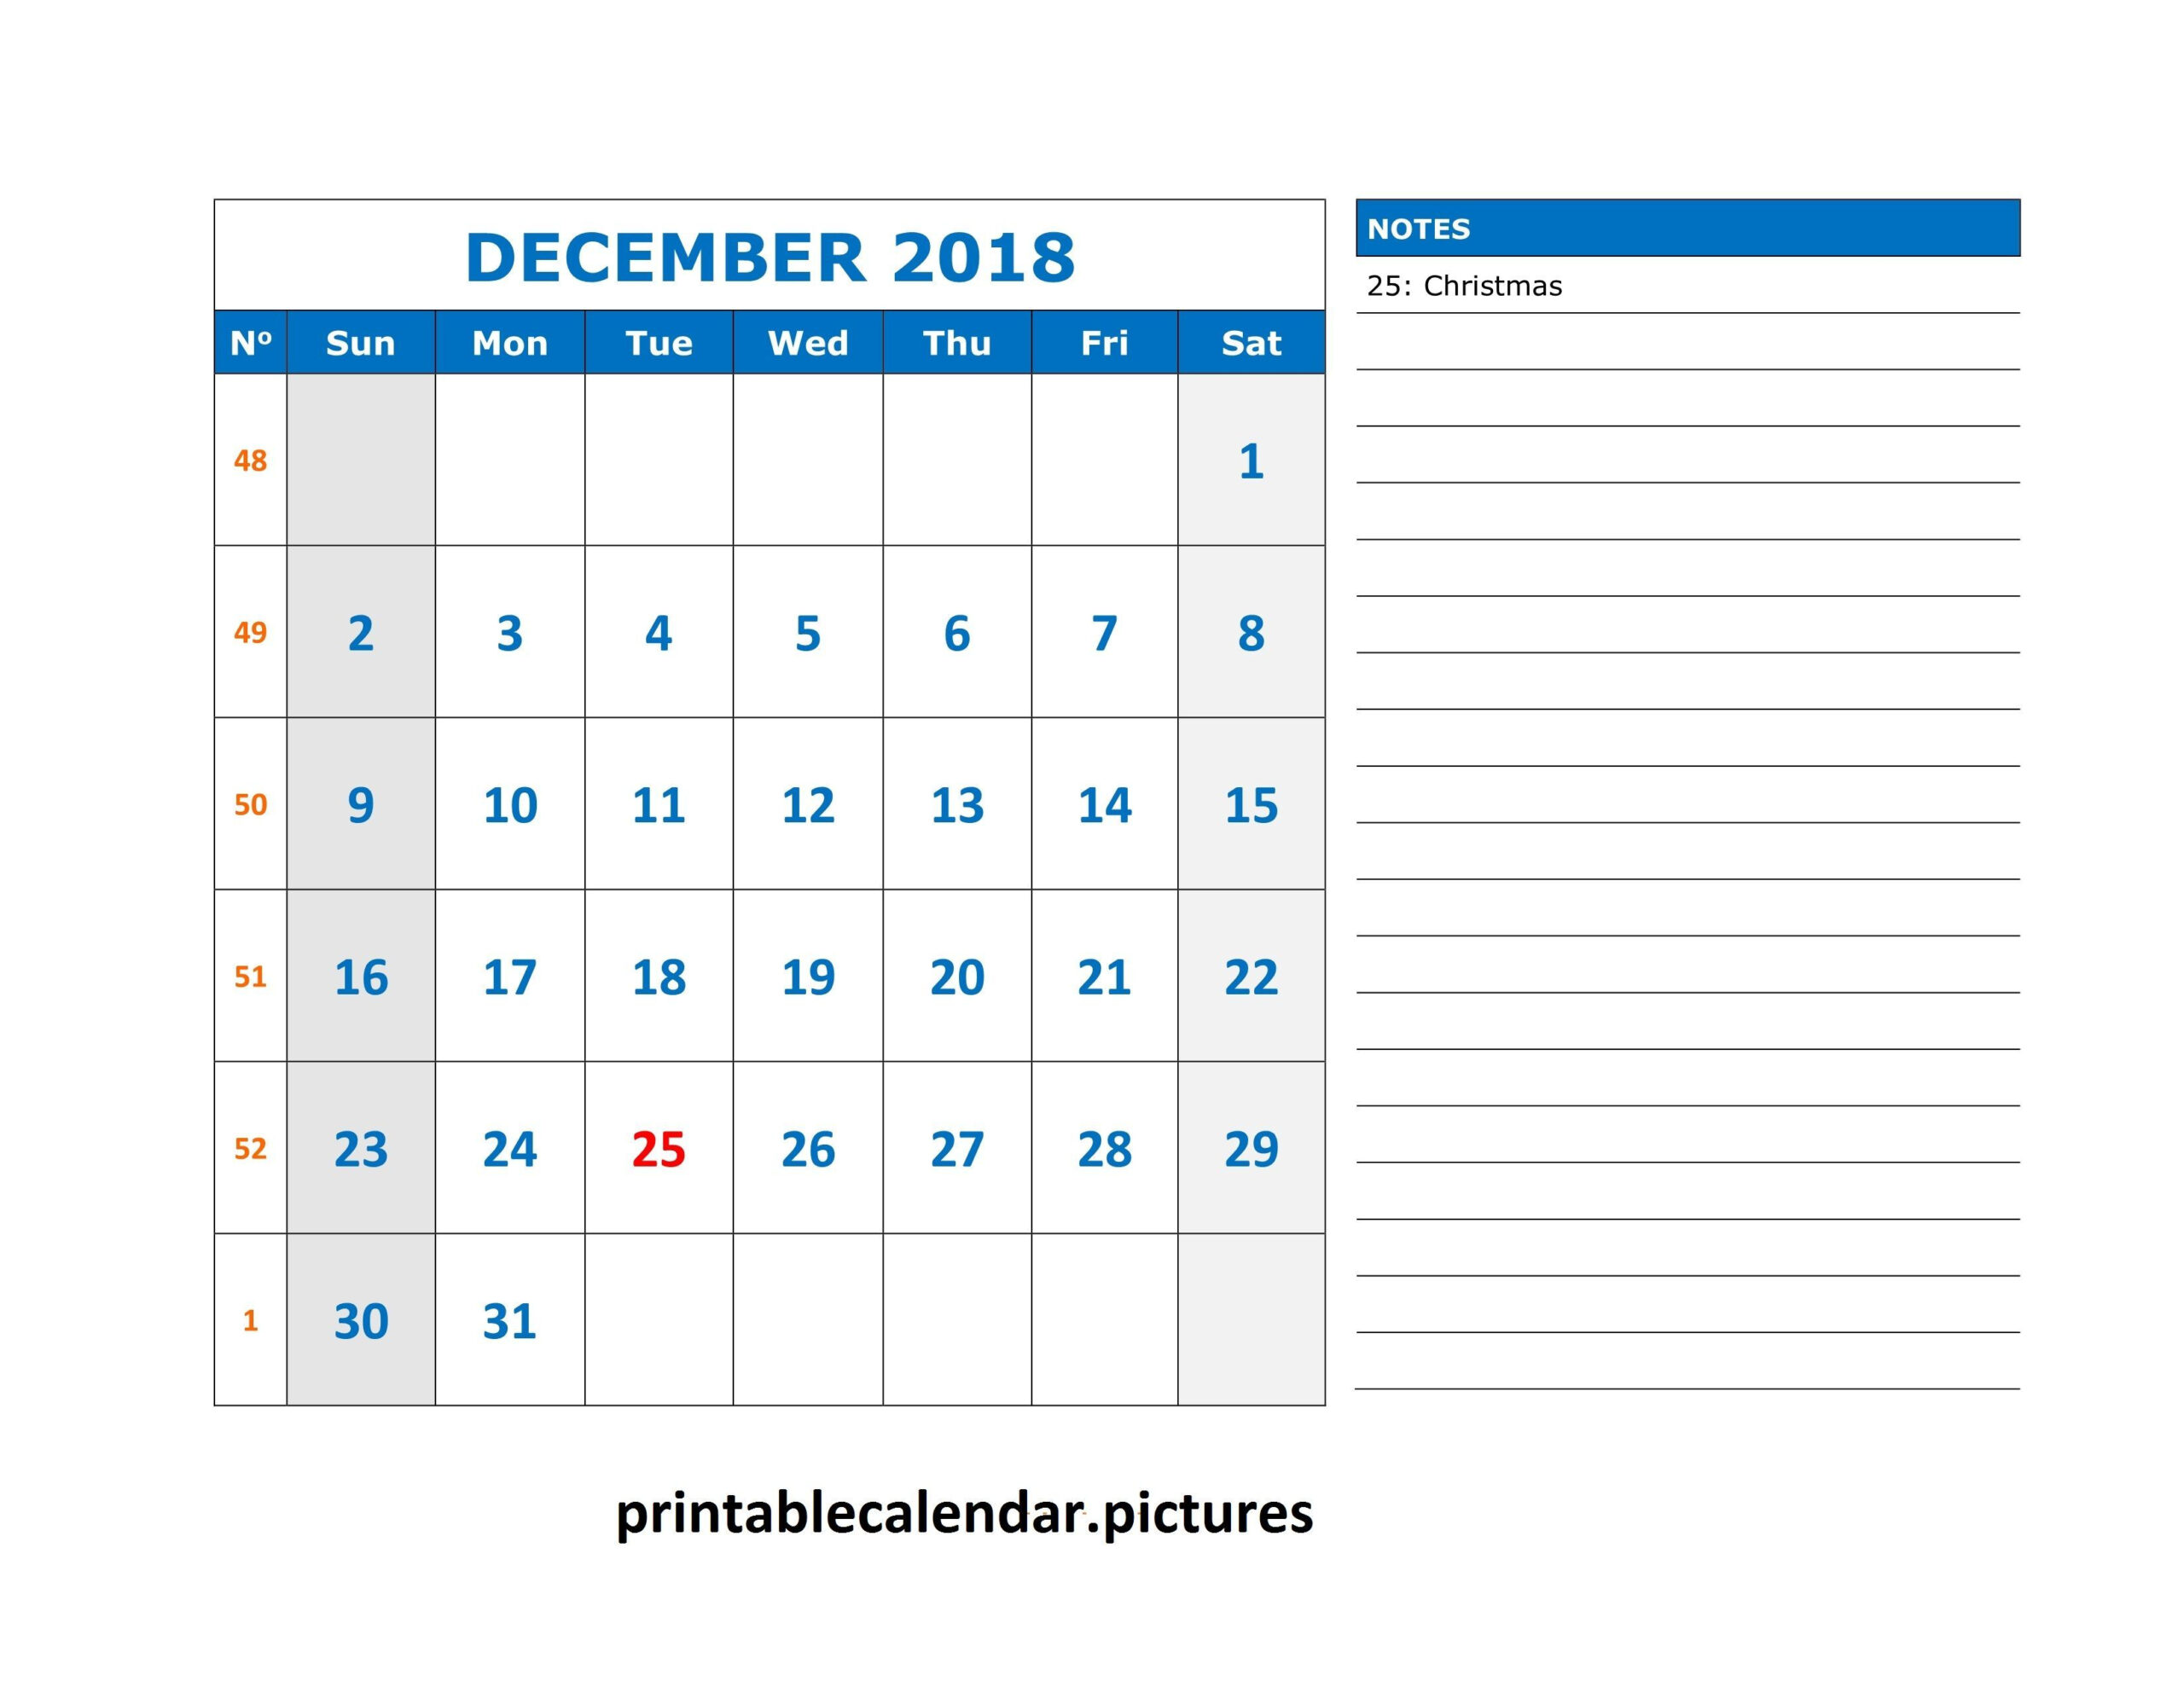 December 2018 Printable Calendar With Note | Calendar